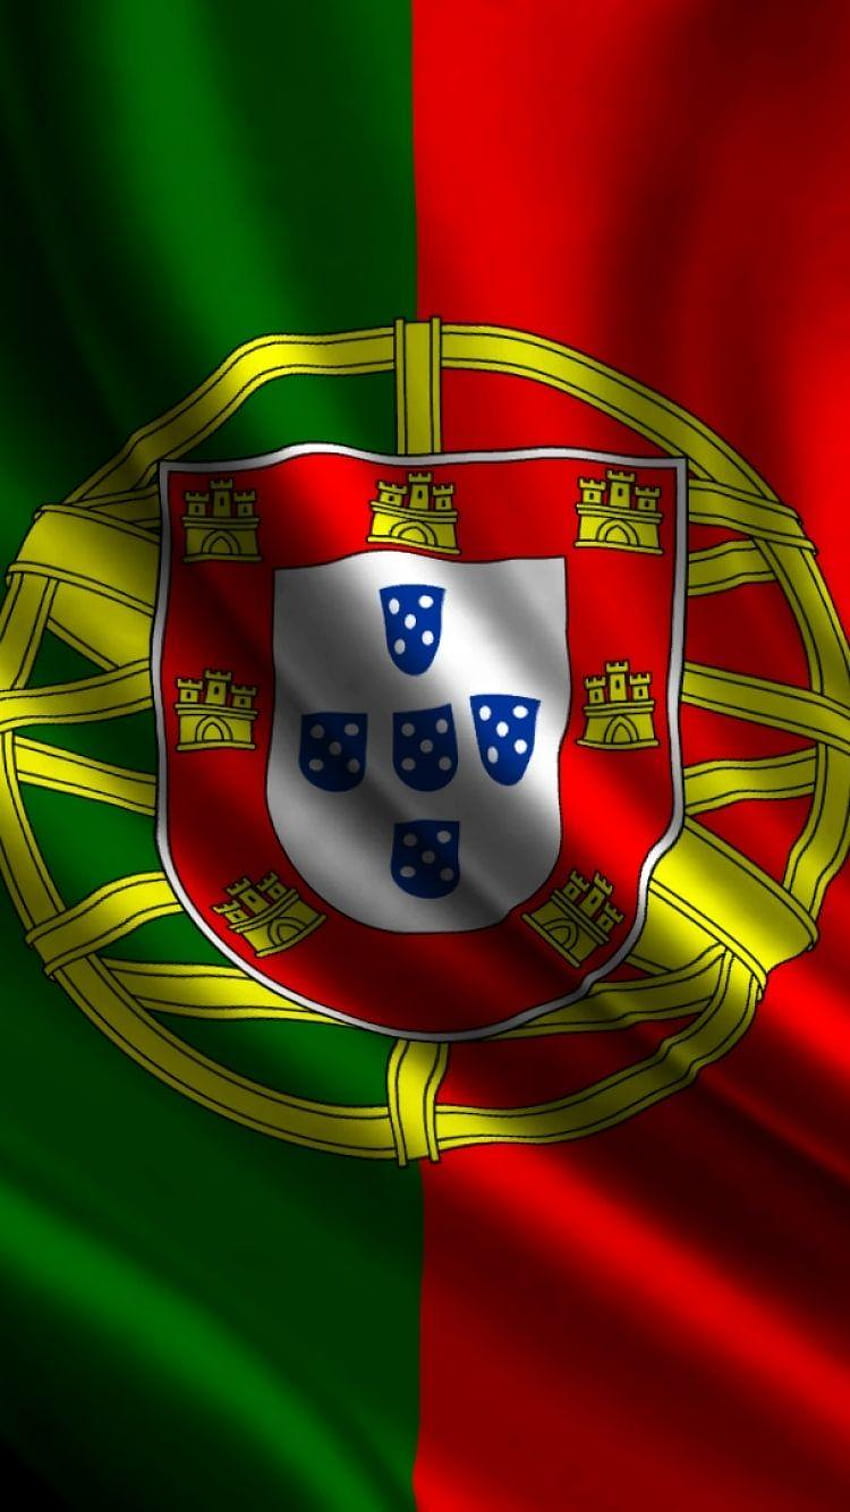 720p Free Download Portugal Flag Portuguese Flag Hd Phone Wallpaper